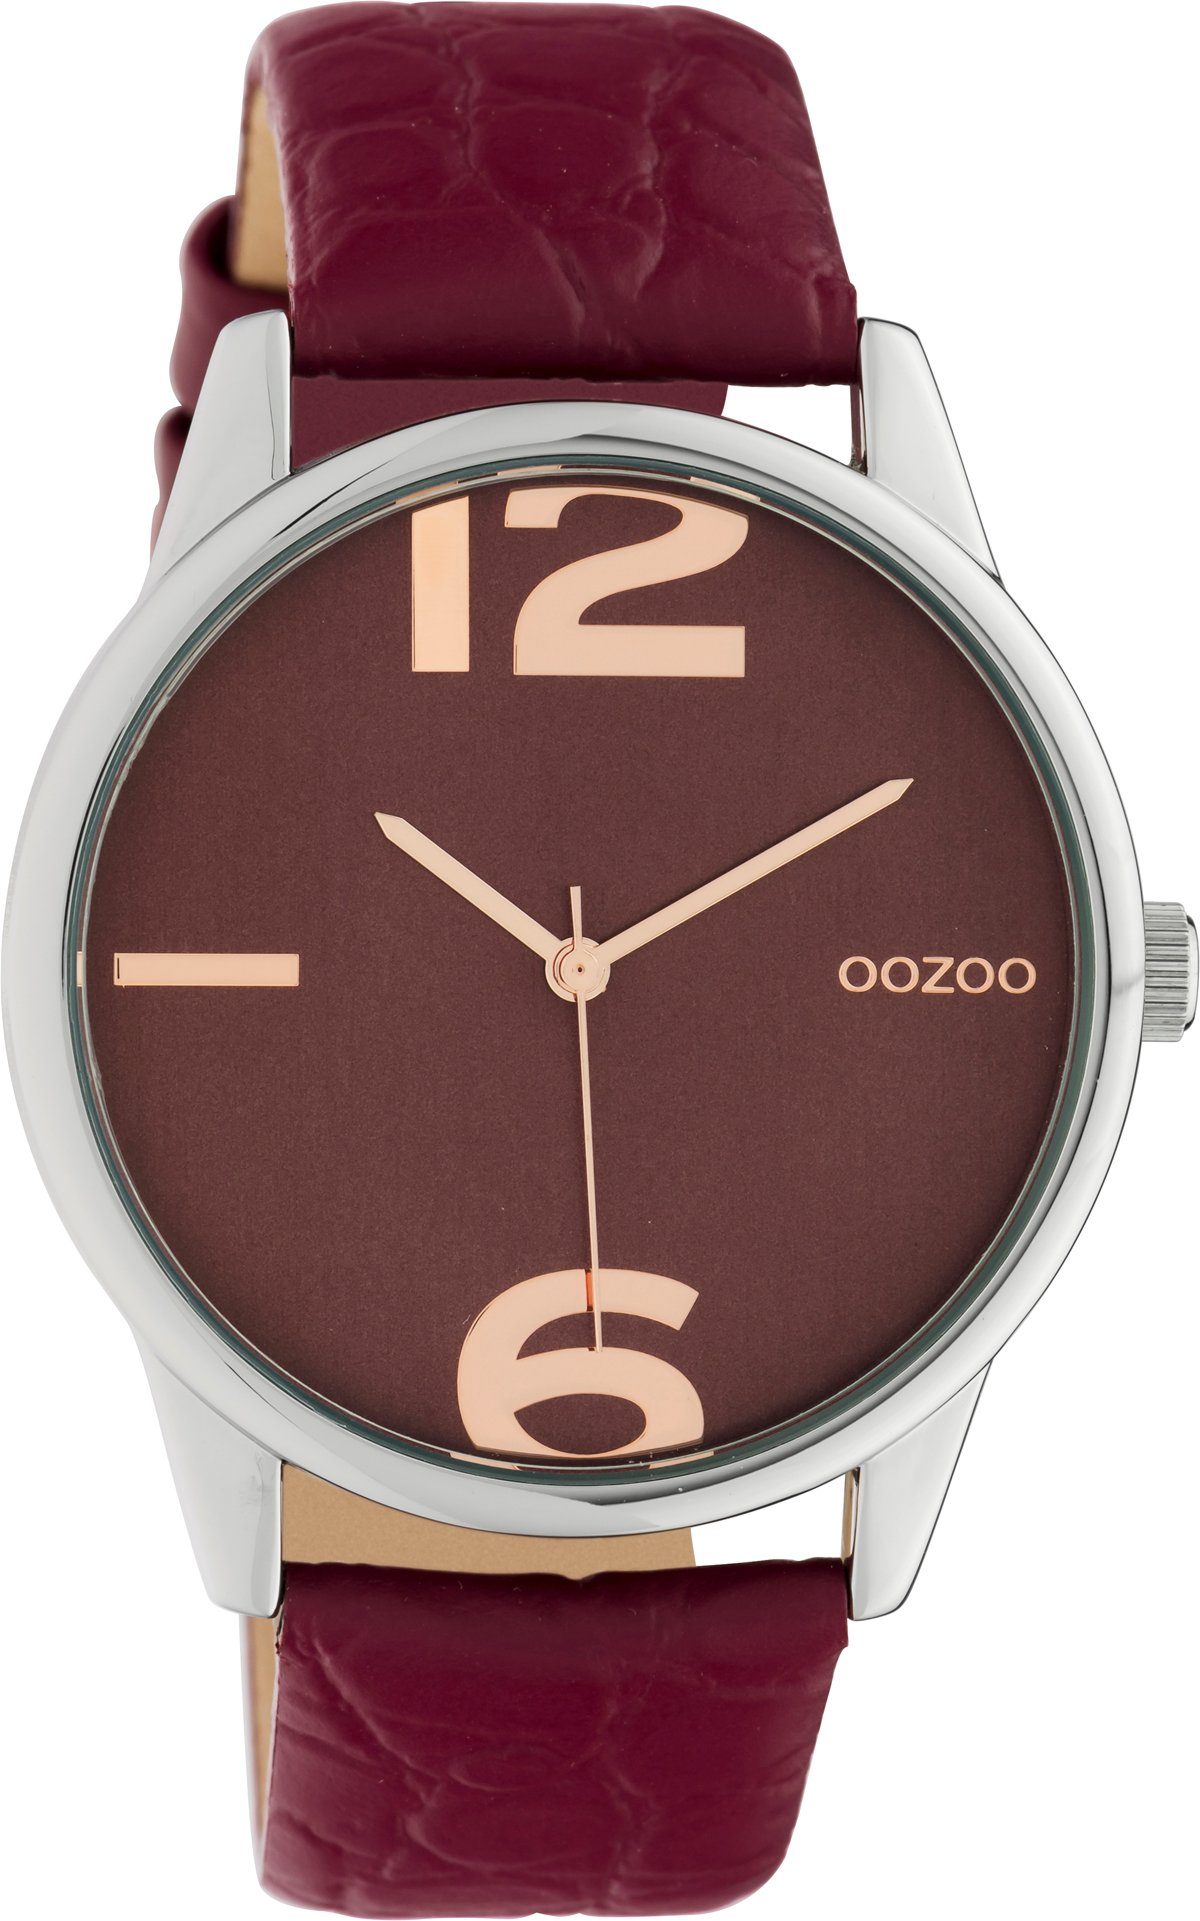 Lederband Uhr Damen 40 Weinrot OOZOO Armbanduhr Quarzuhr mm C10378